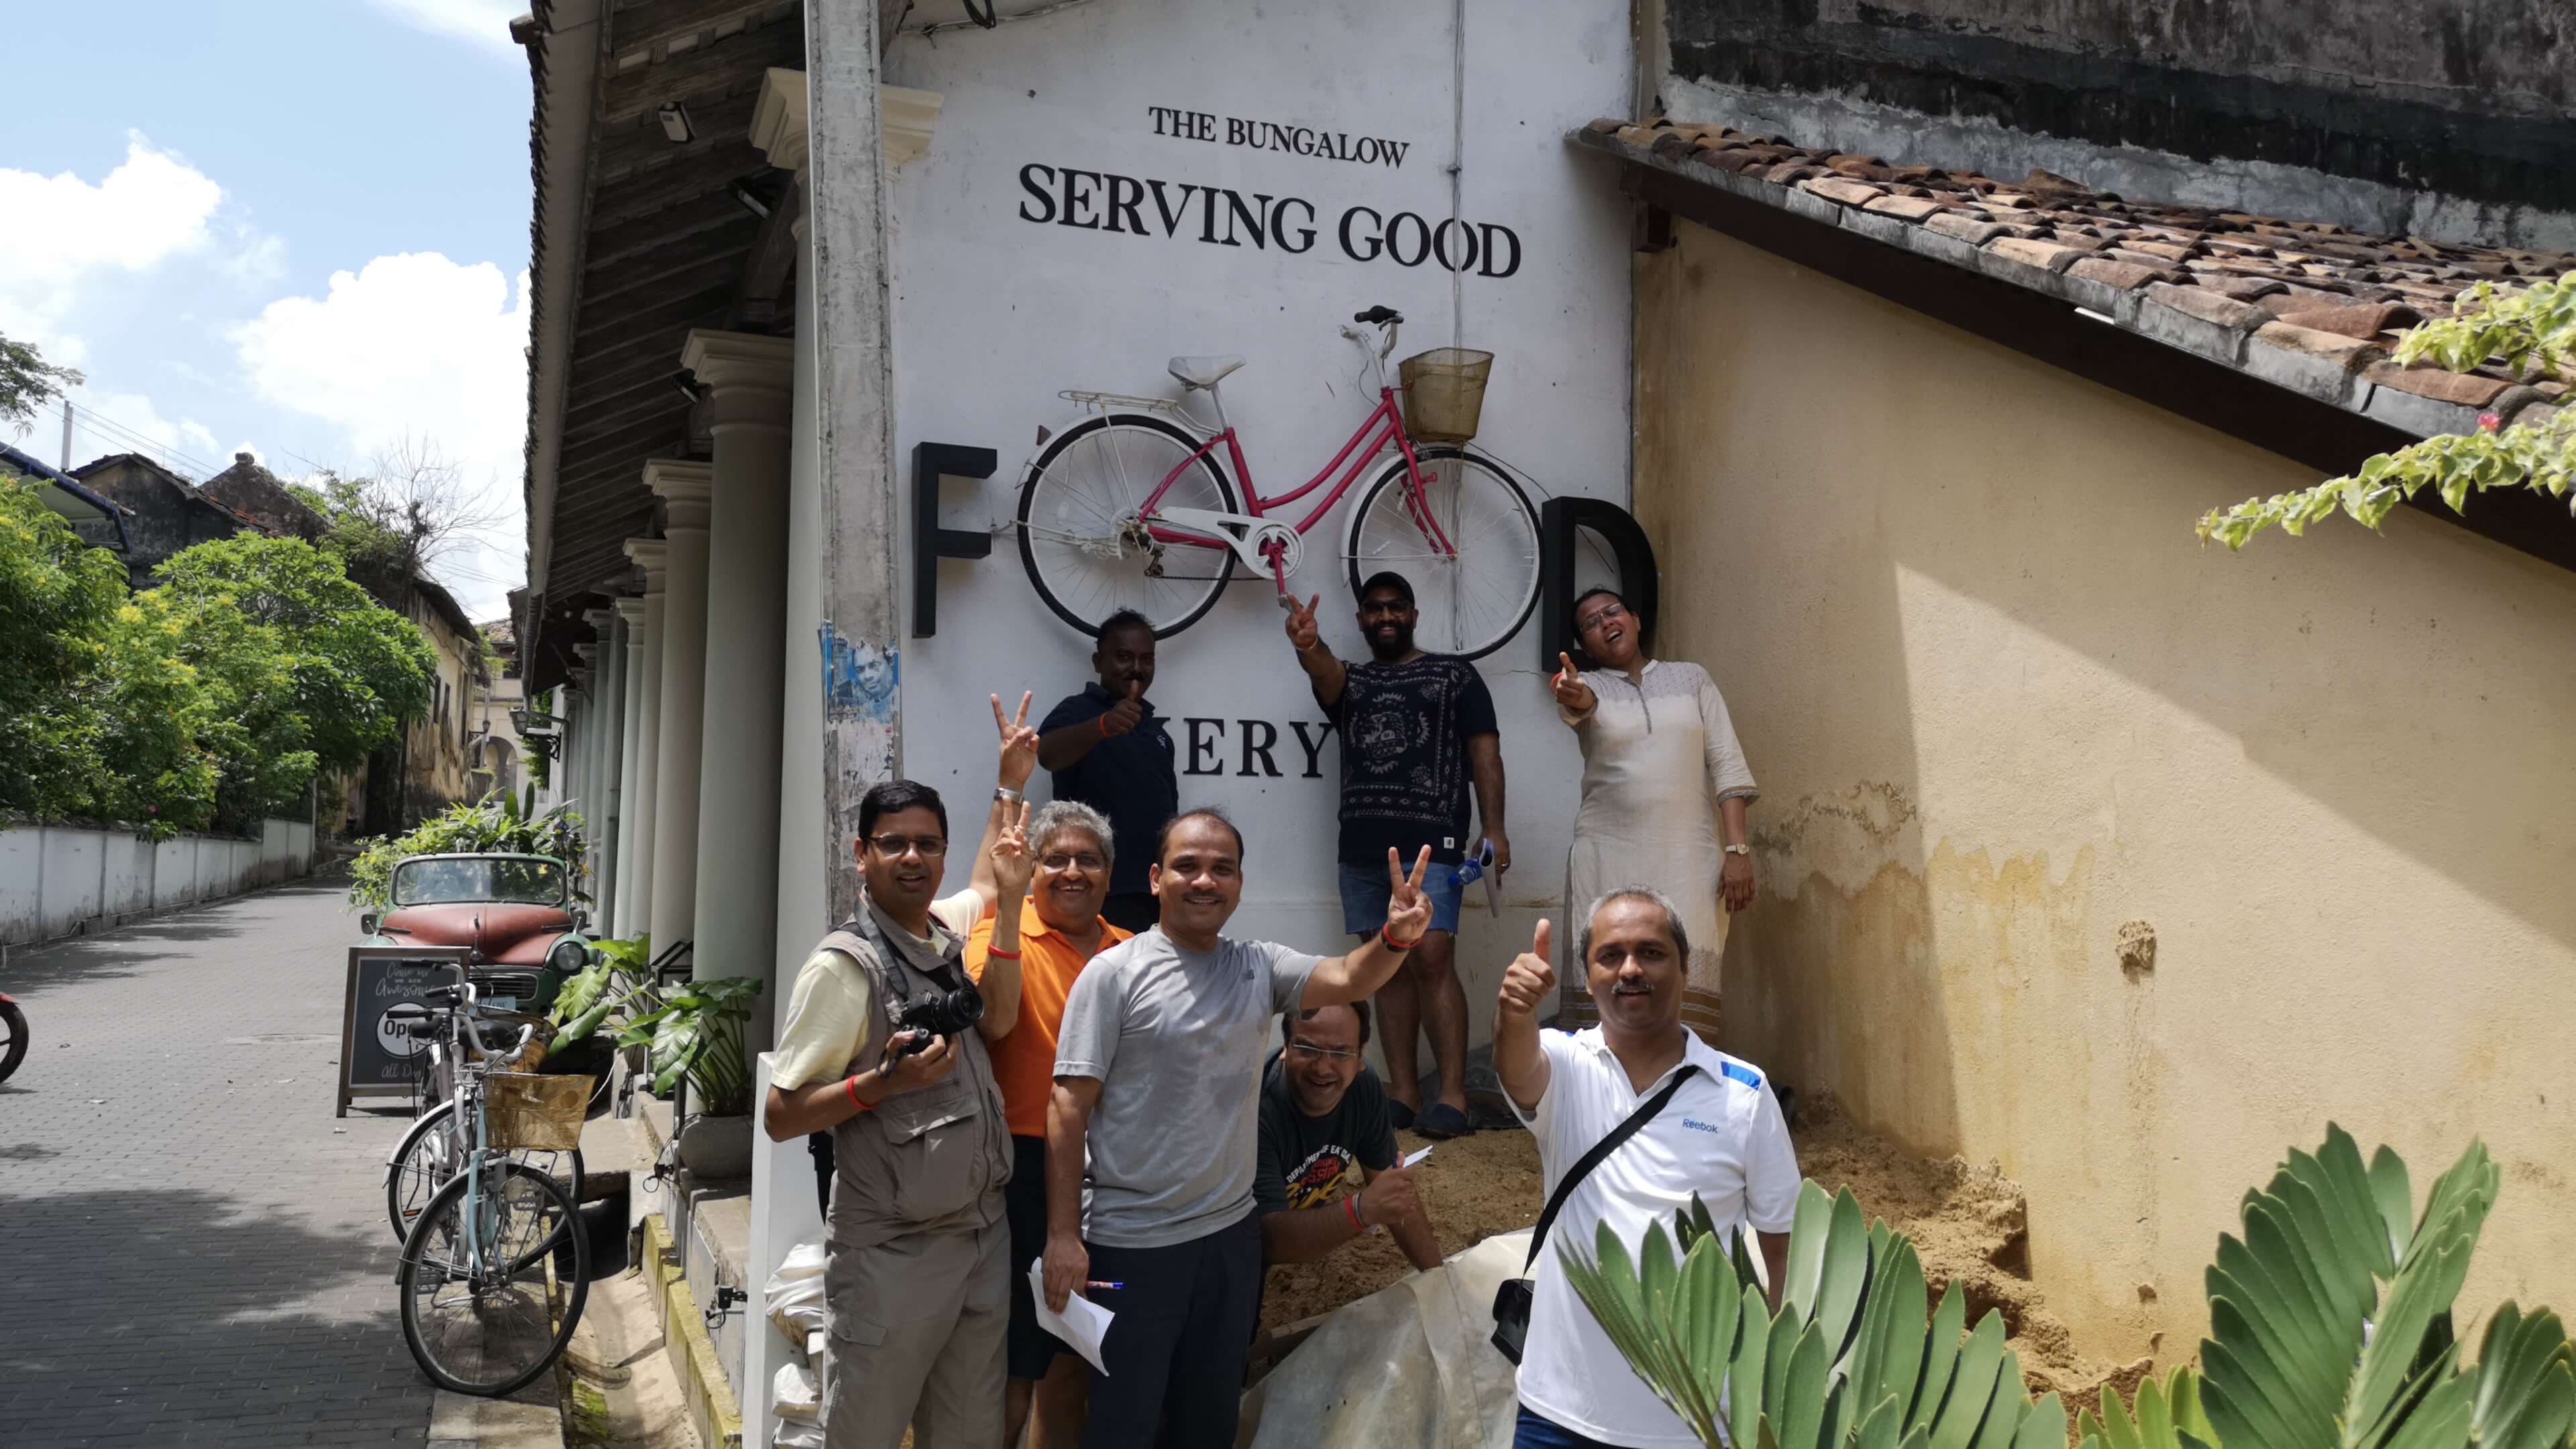 Una visita al bungalow Sri Lanka "Sirviendo buena comida".